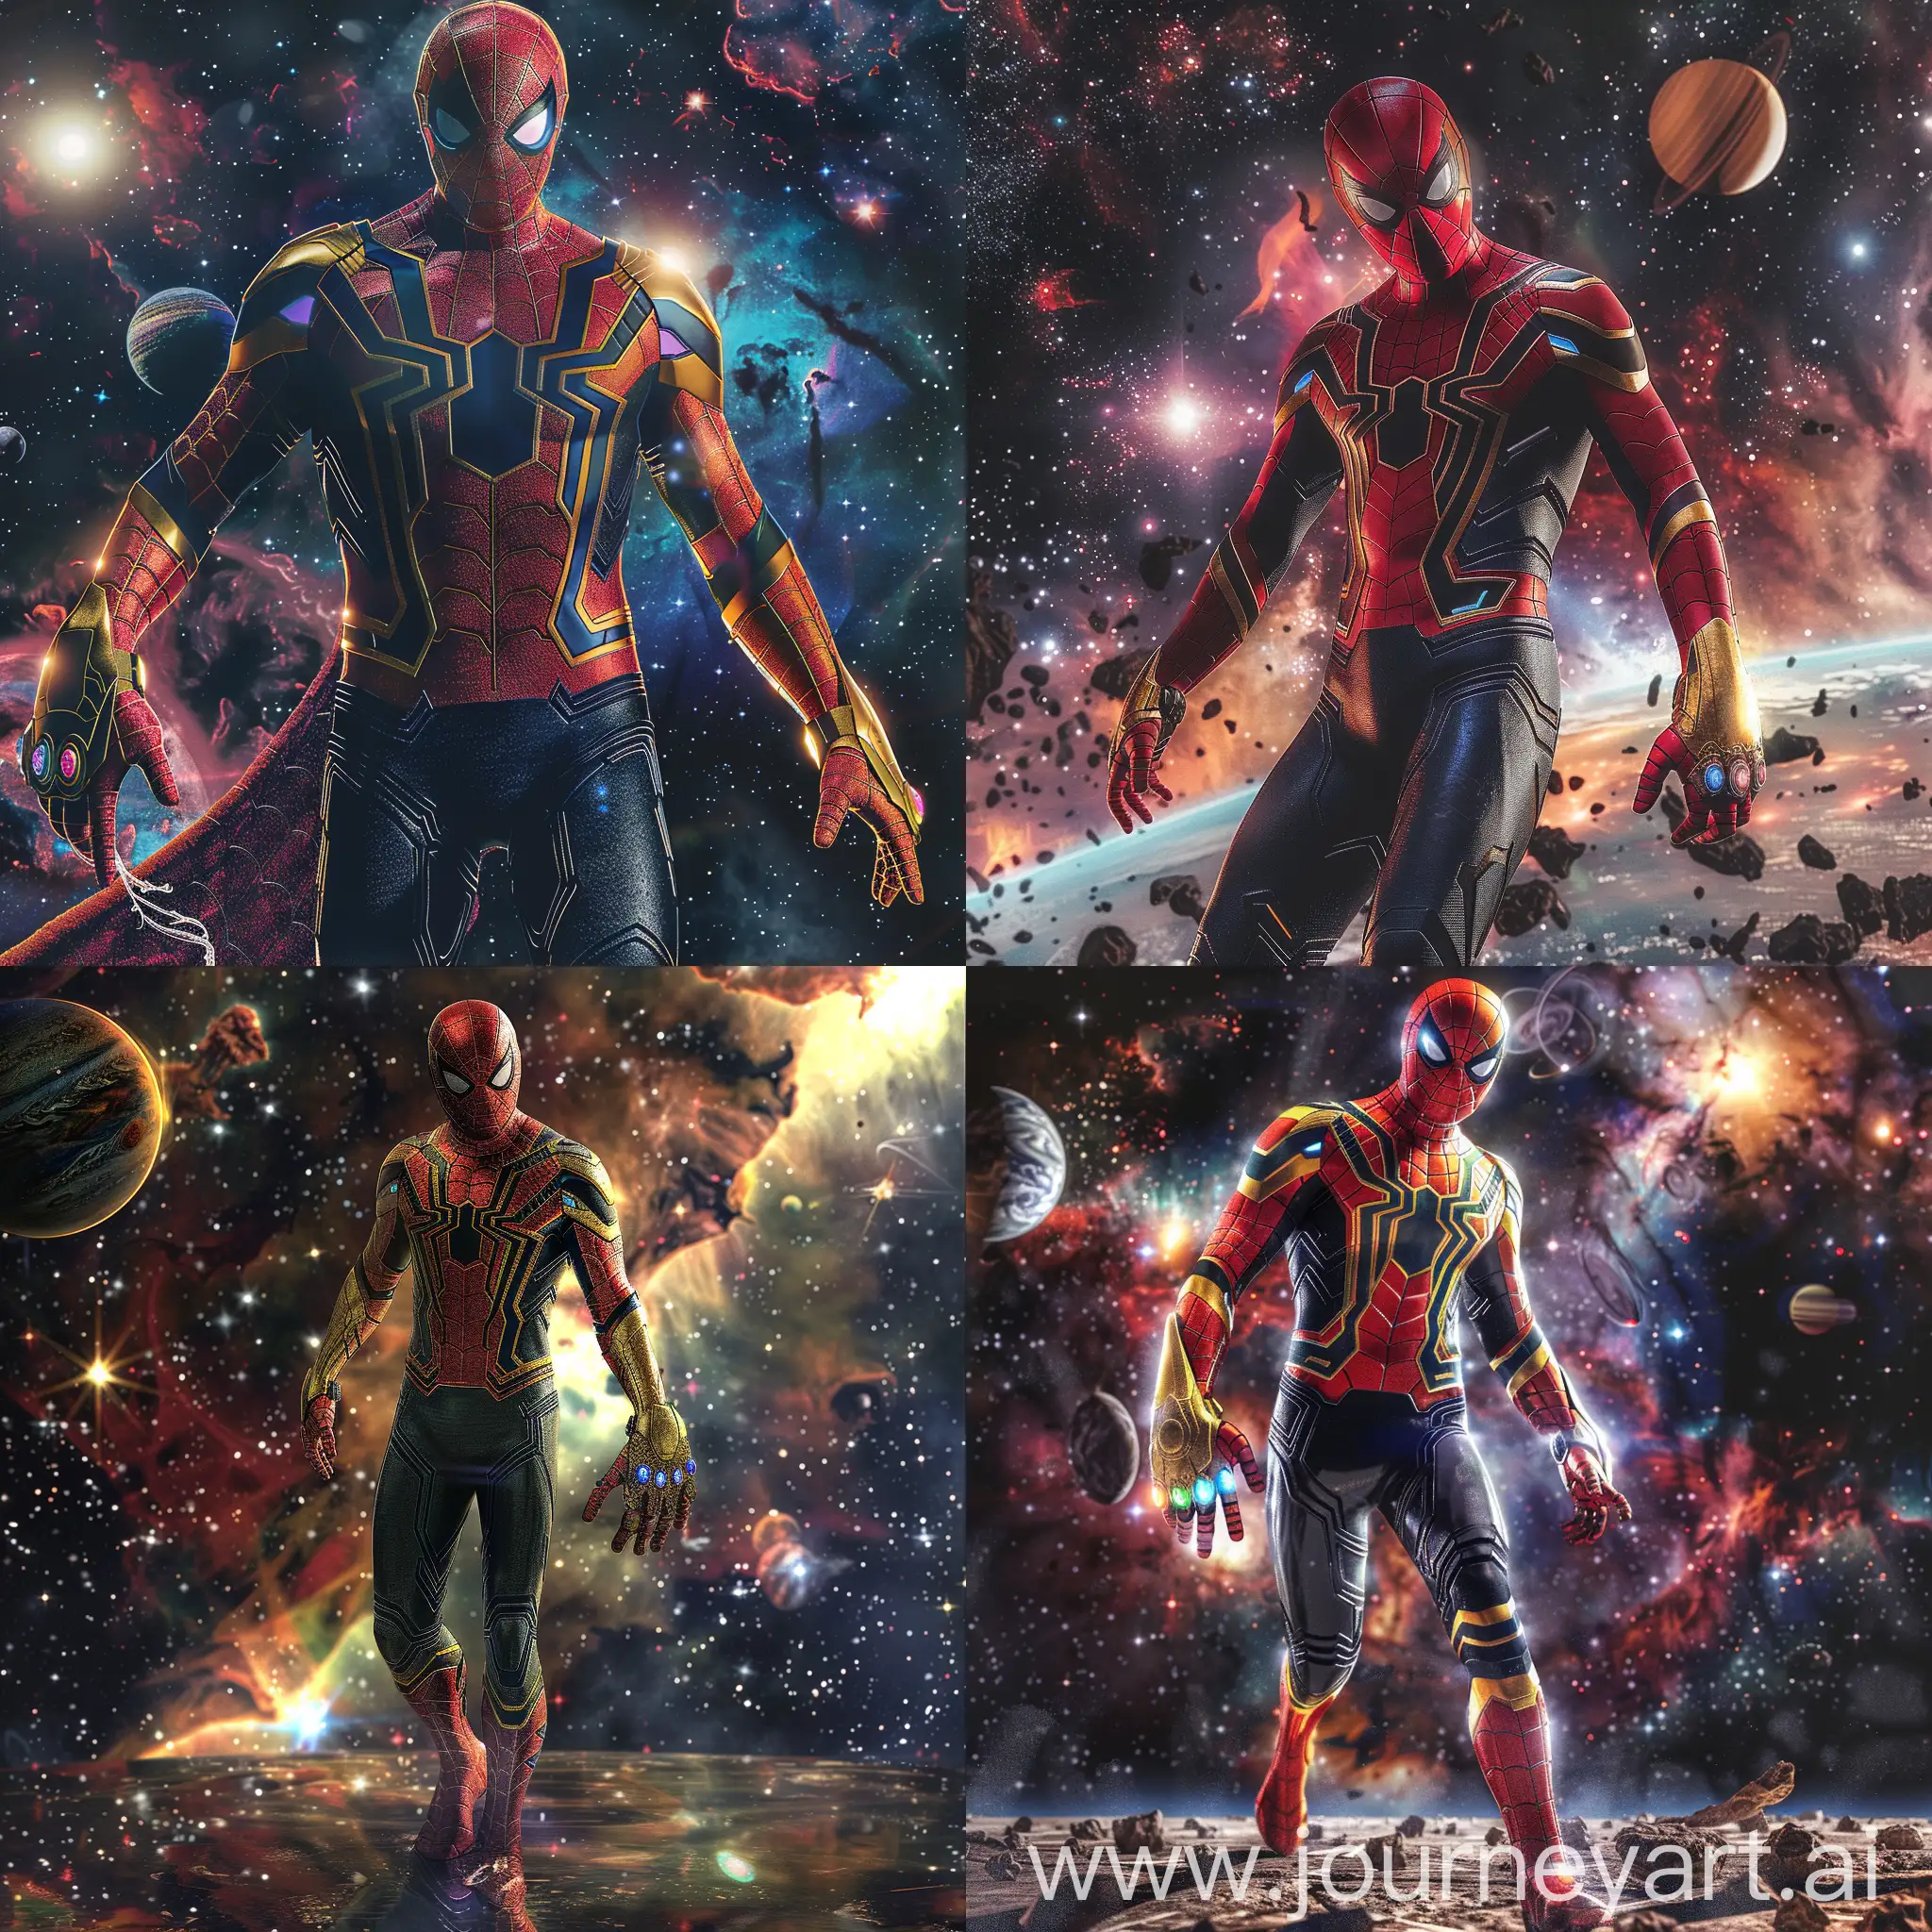 SpiderMan-Wielding-Thanos-Gauntlet-in-Cosmic-Space-Walk